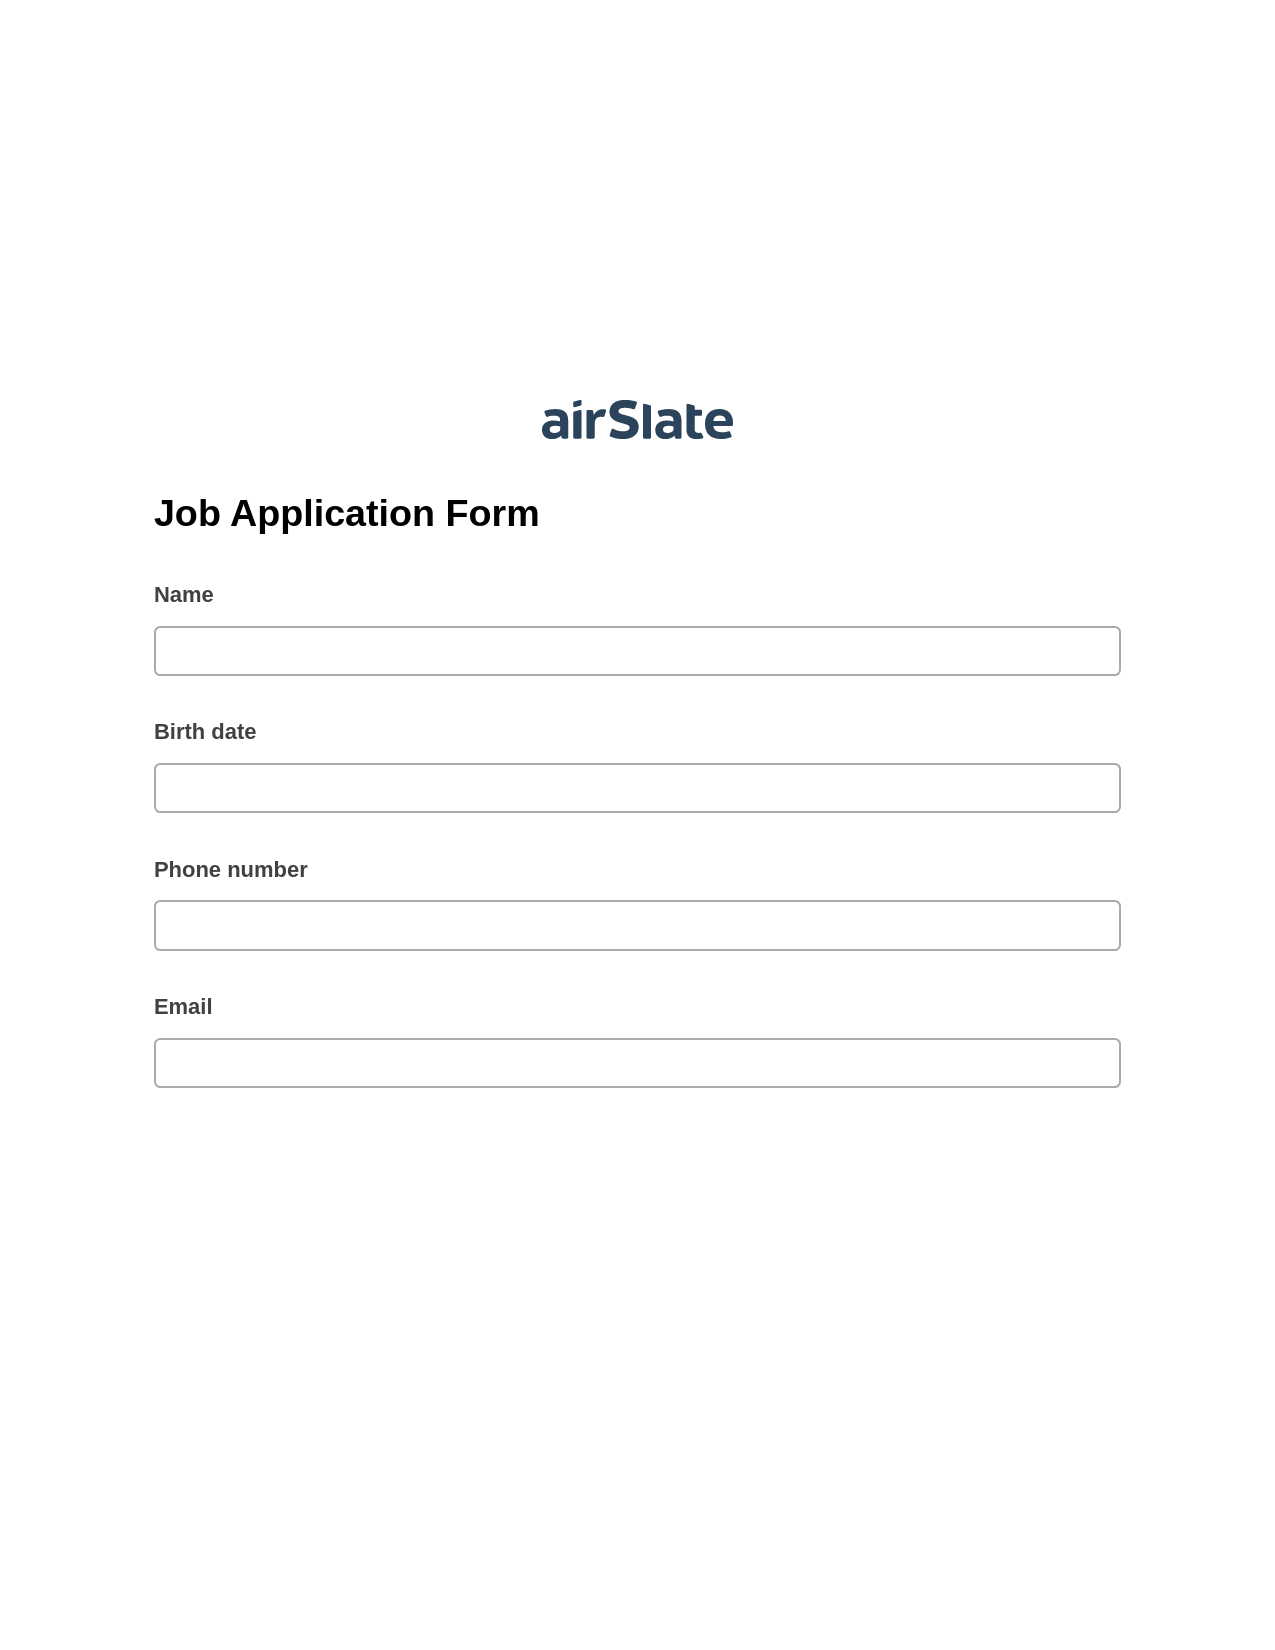 Multirole Job Application Form Pre-fill from Excel Spreadsheet Bot, Create slate bot, Google Drive Bot